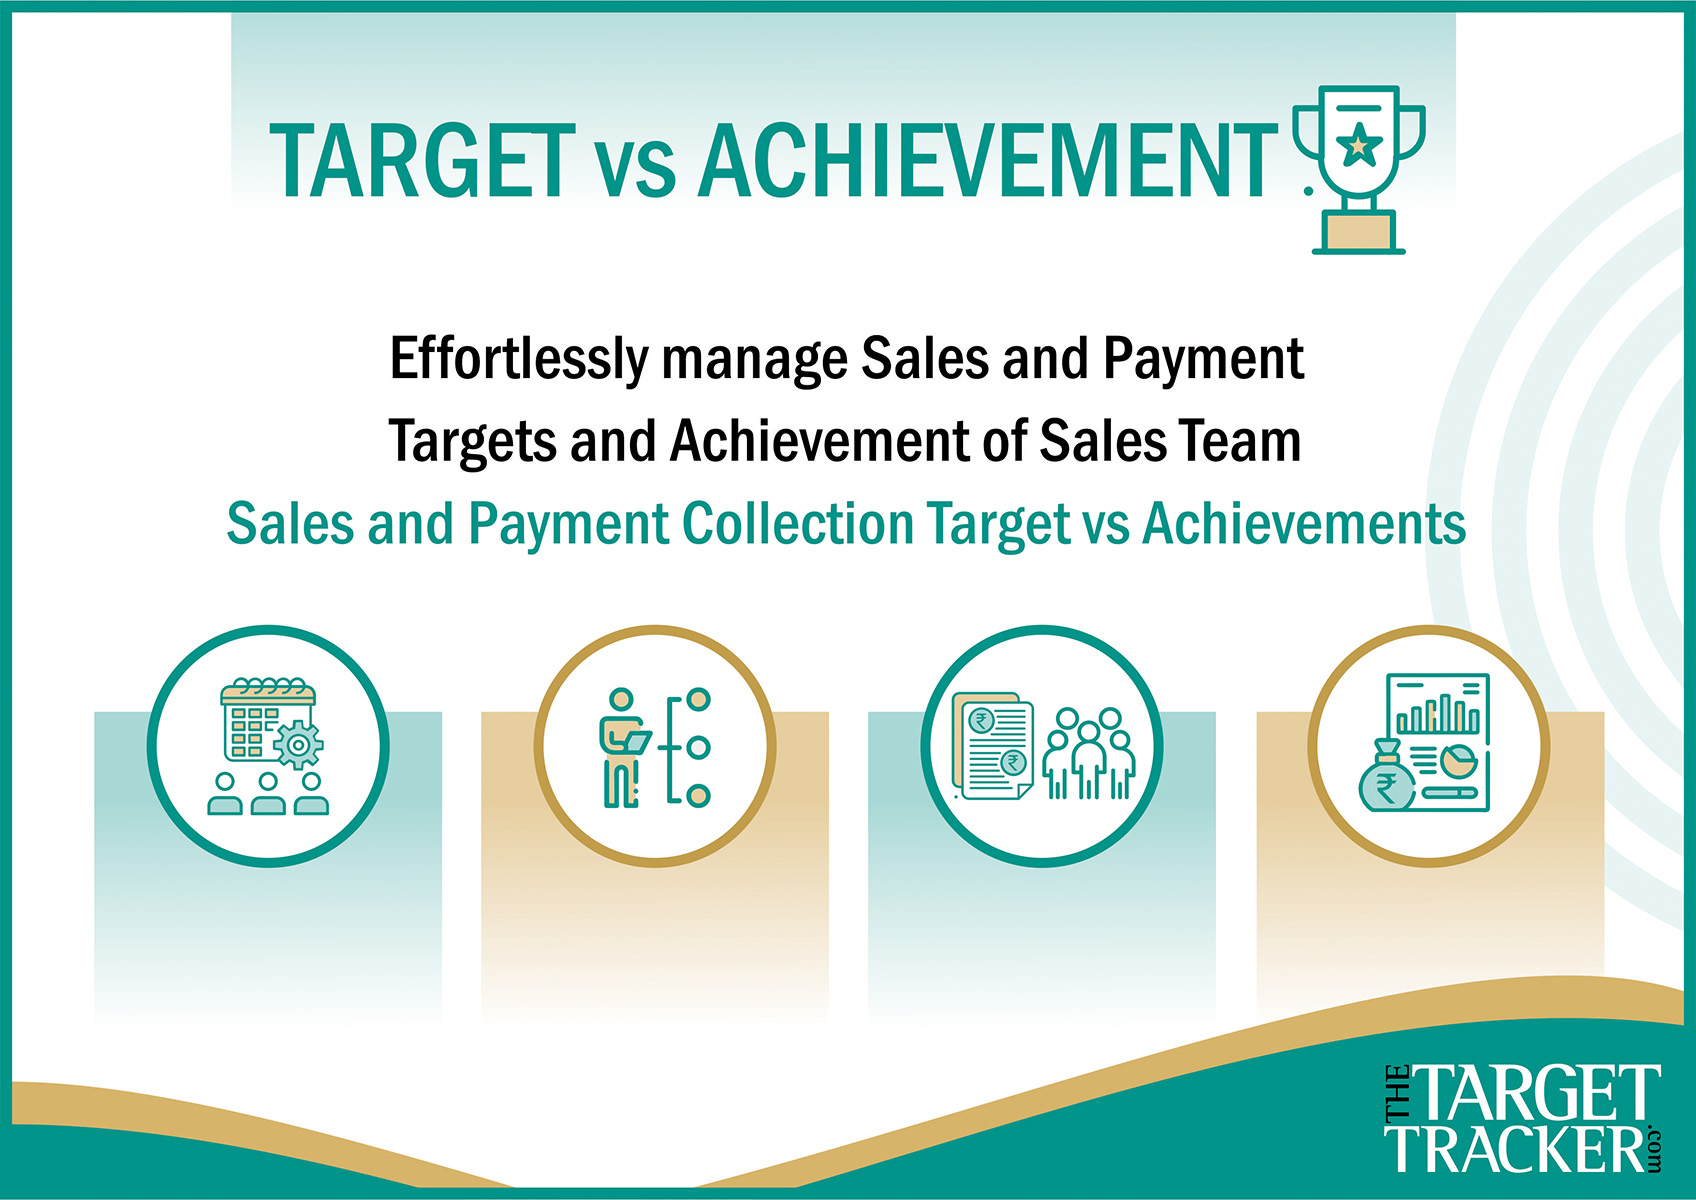 Target vs Achievement Infographic - TheTargeTracker.com